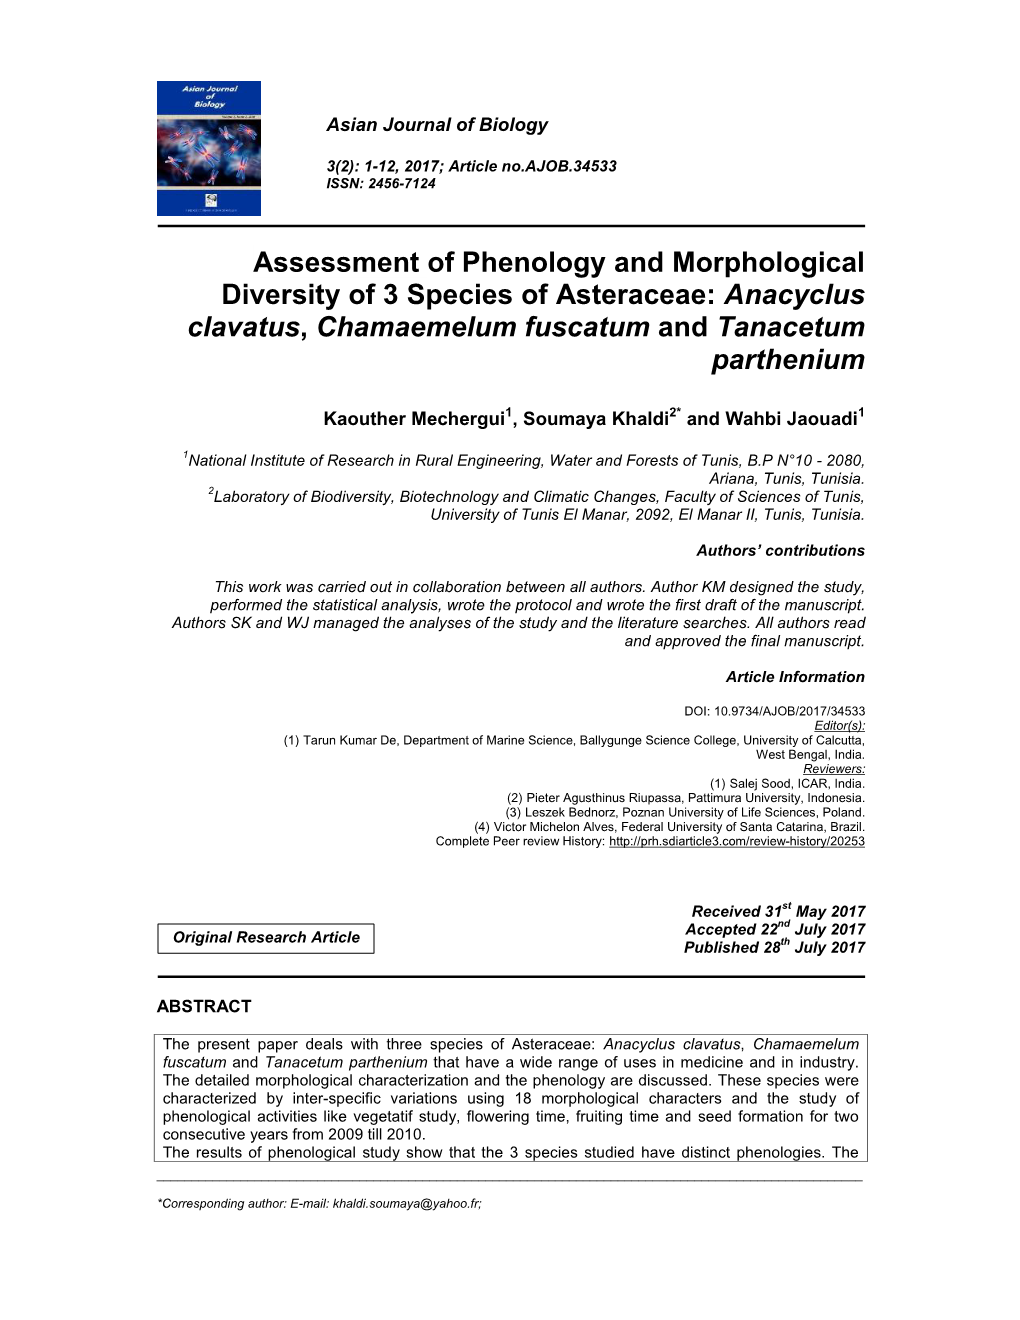 Assessment of Phenology and Morphological Diversity of 3 Species of Asteraceae: Anacyclus Clavatus, Chamaemelum Fuscatum and Tanacetum Parthenium